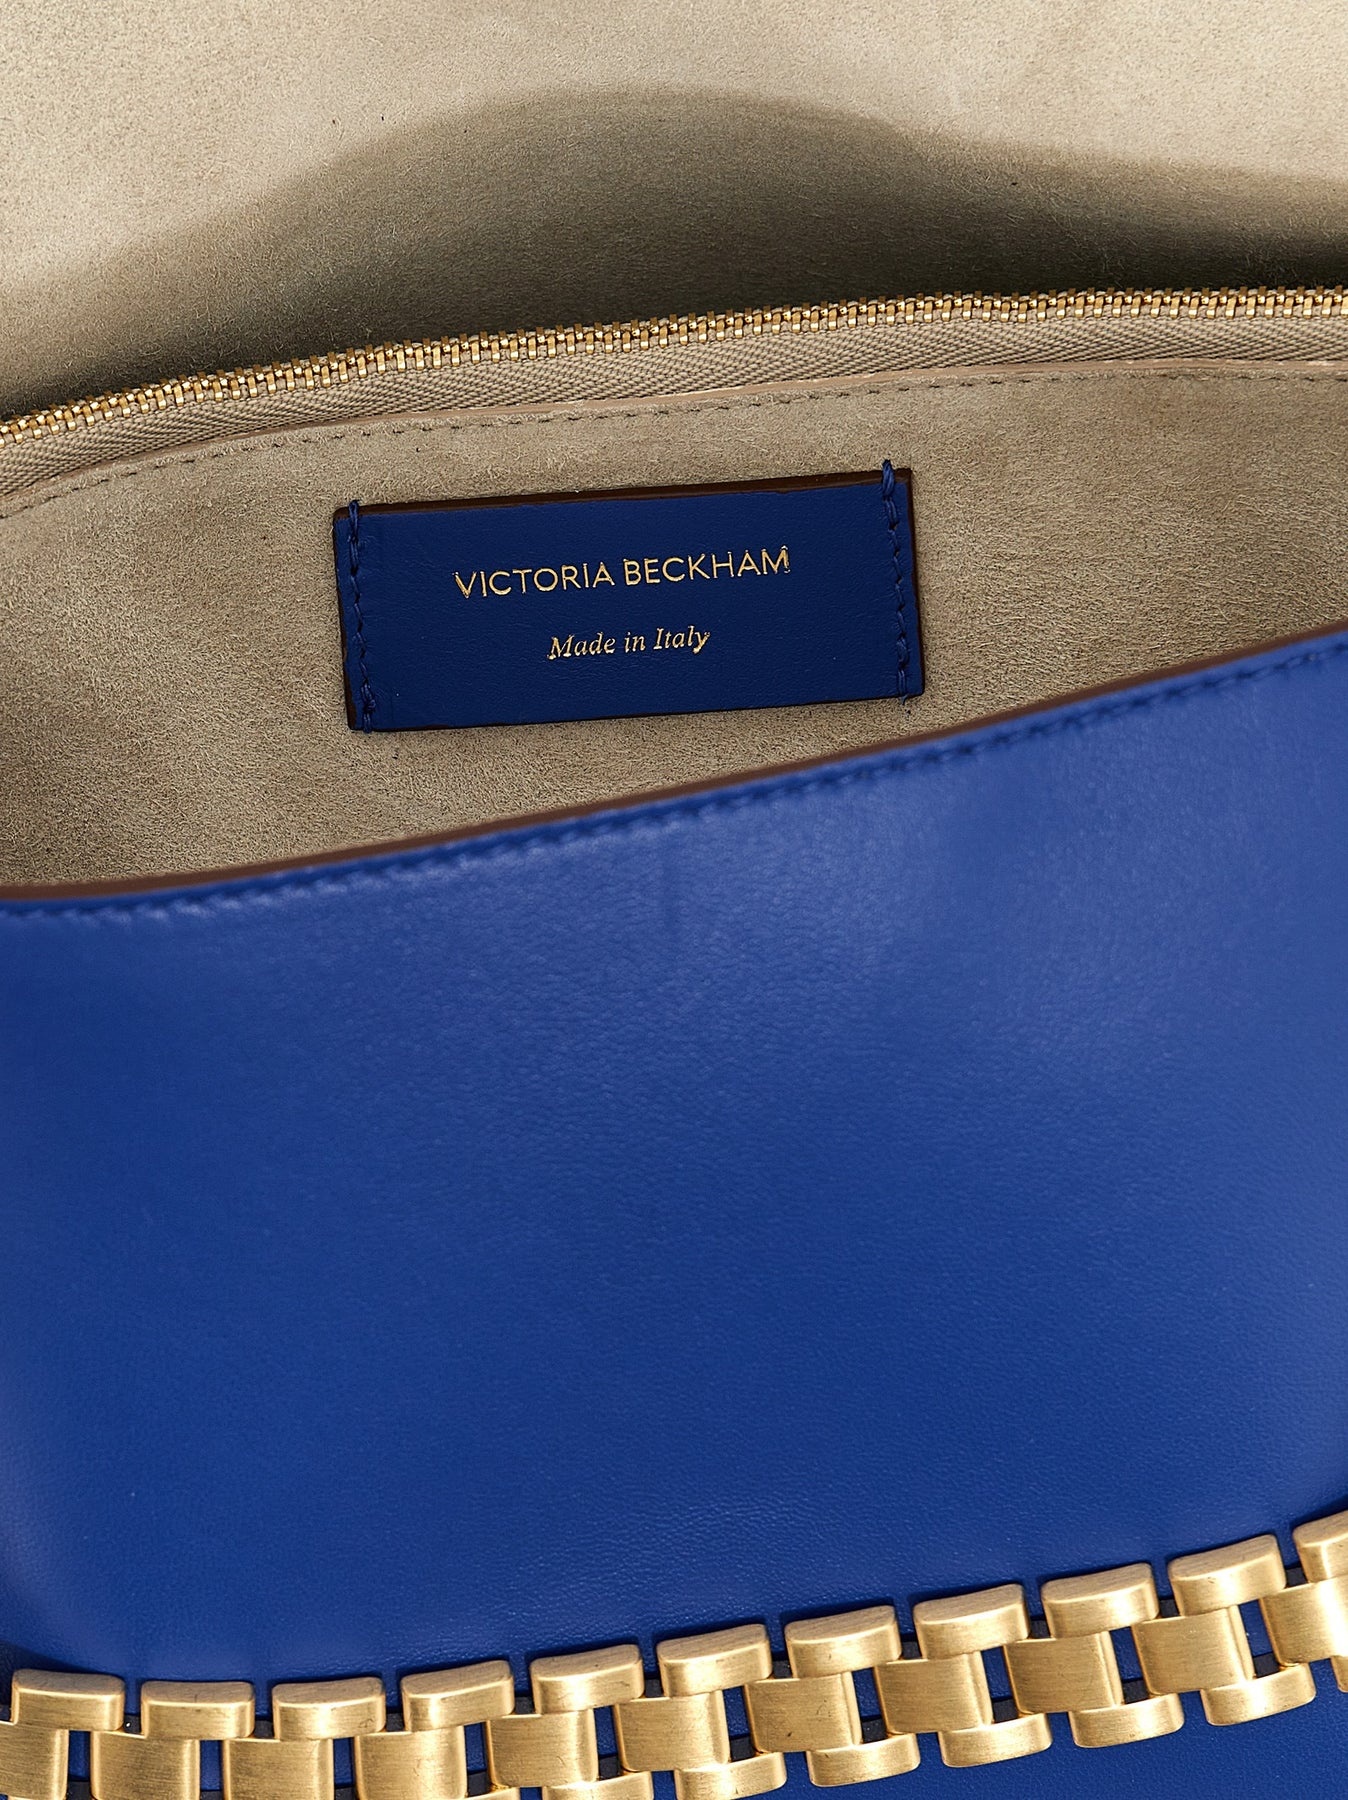 Victoria Beckham Chain Shoulder Bag